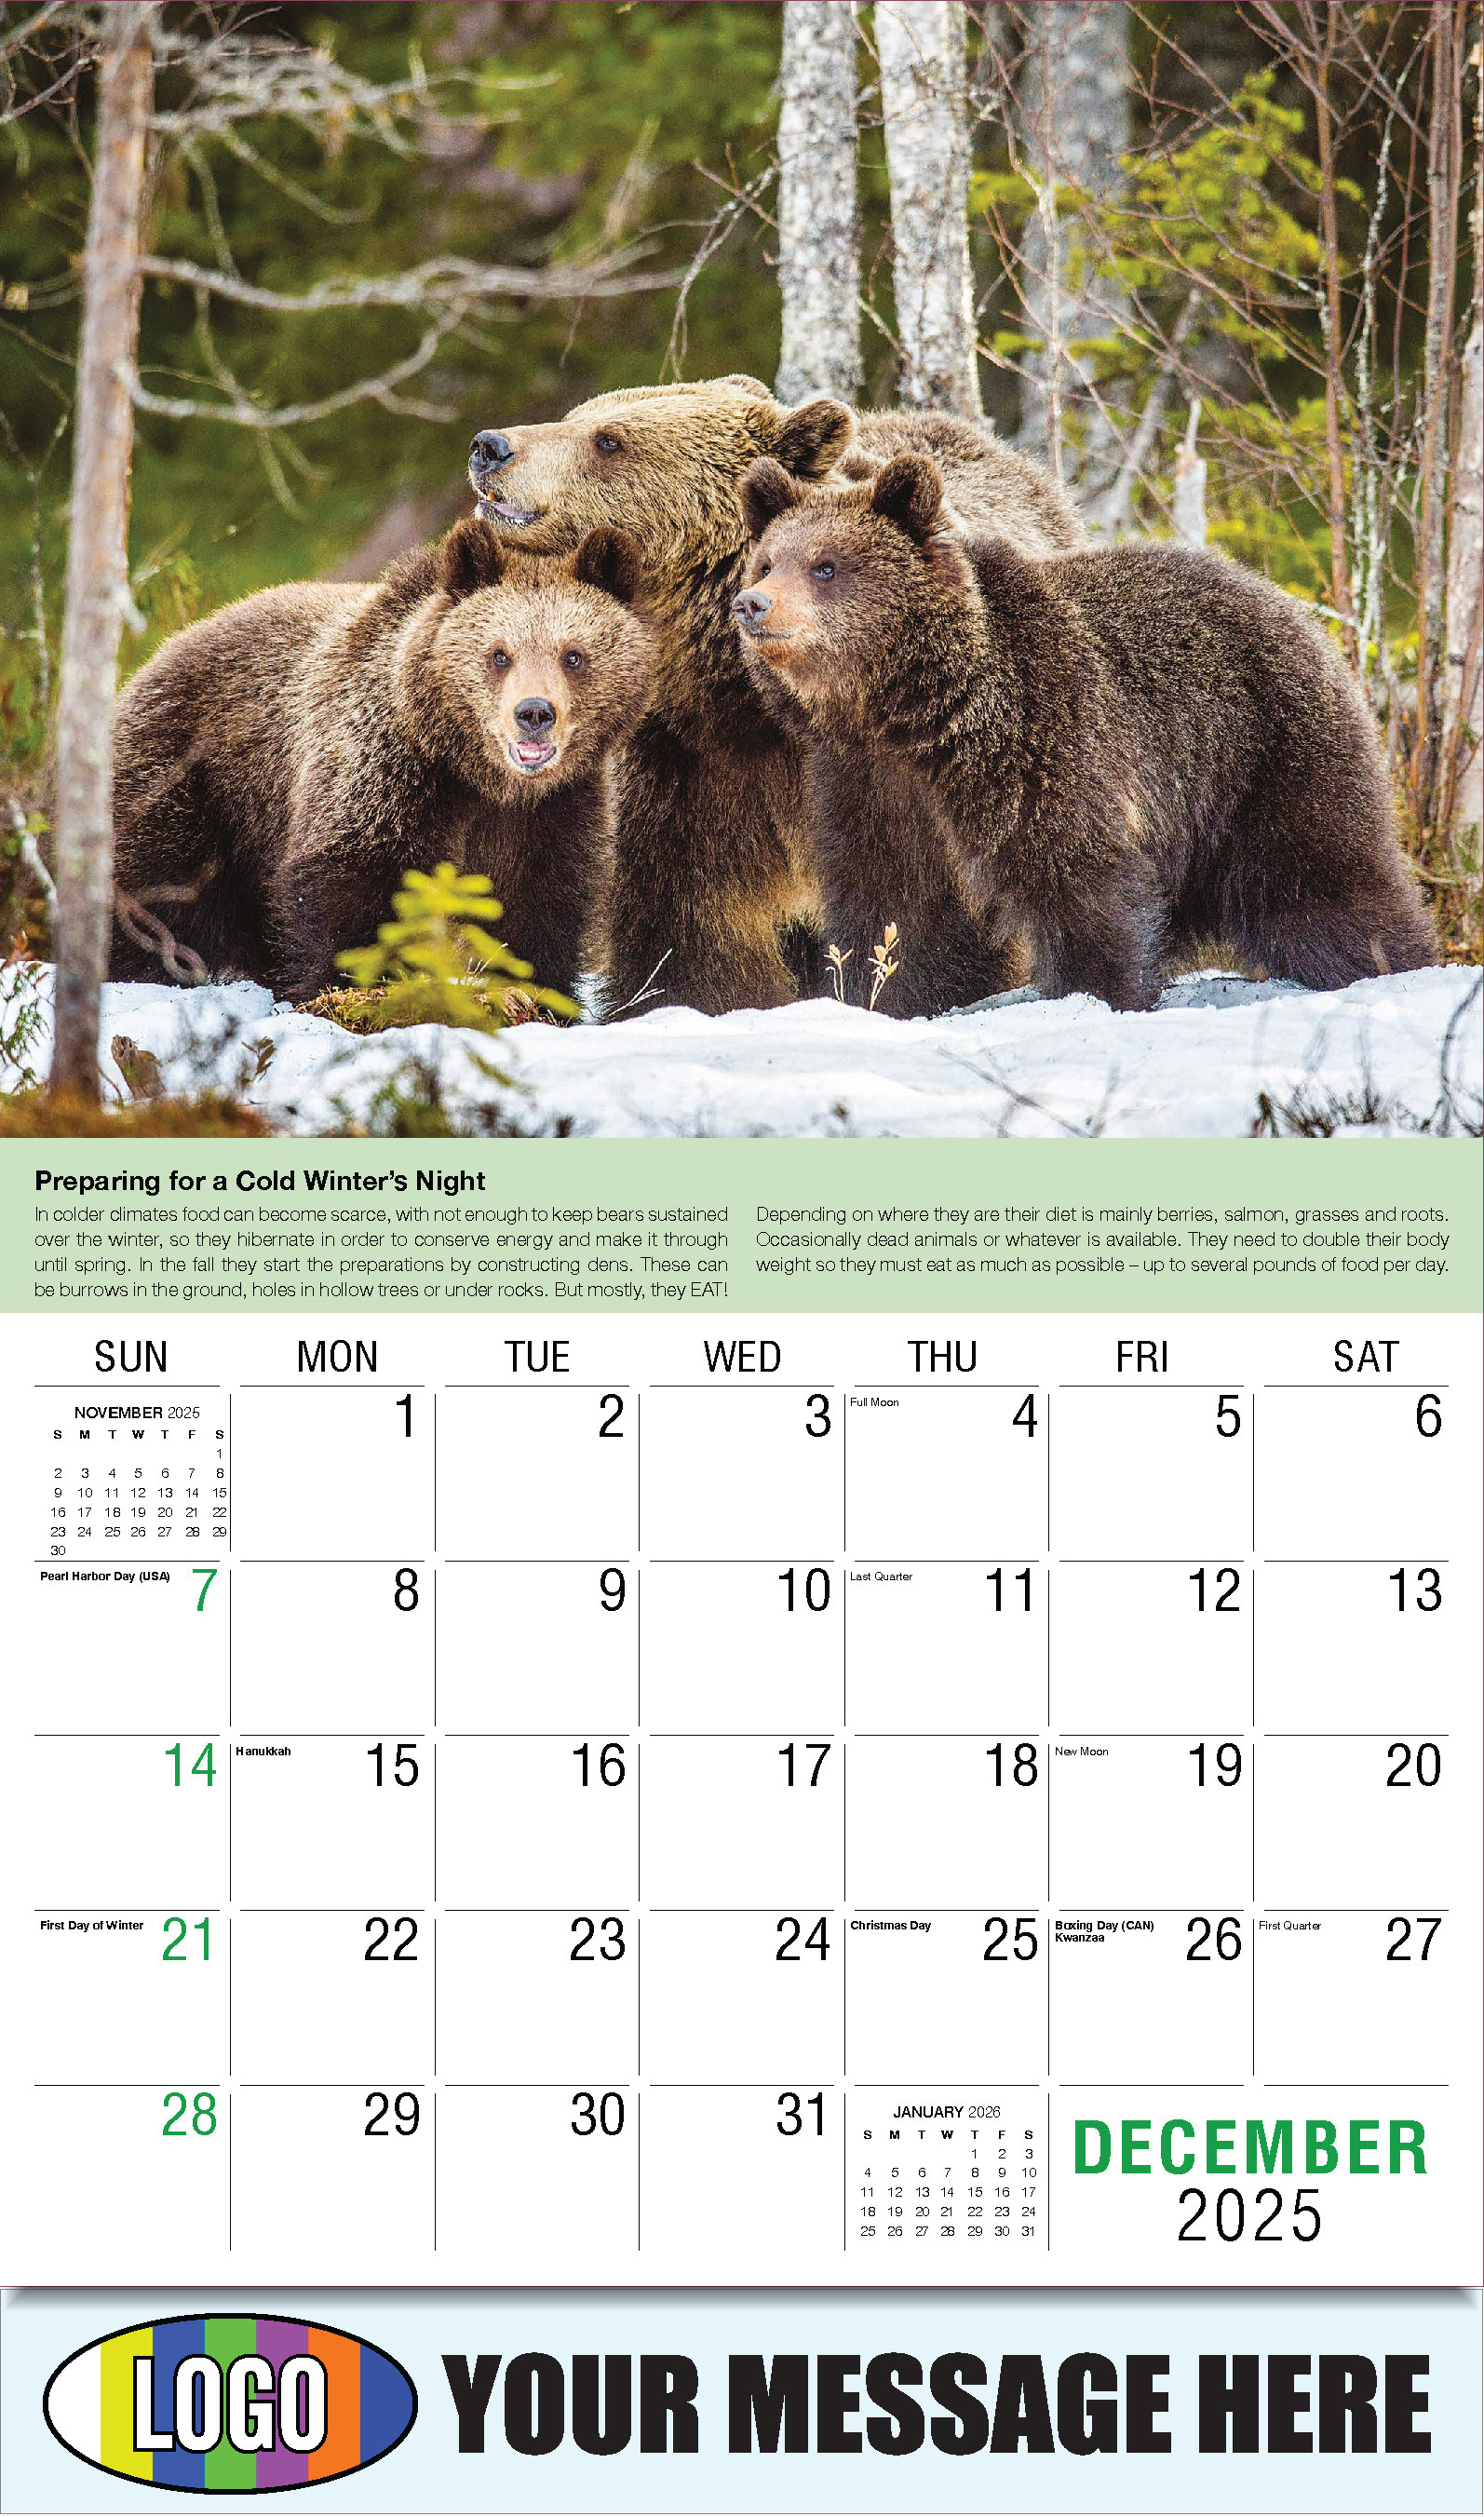 Planet Earth 2025 Business Promotional Wall Calendar - December